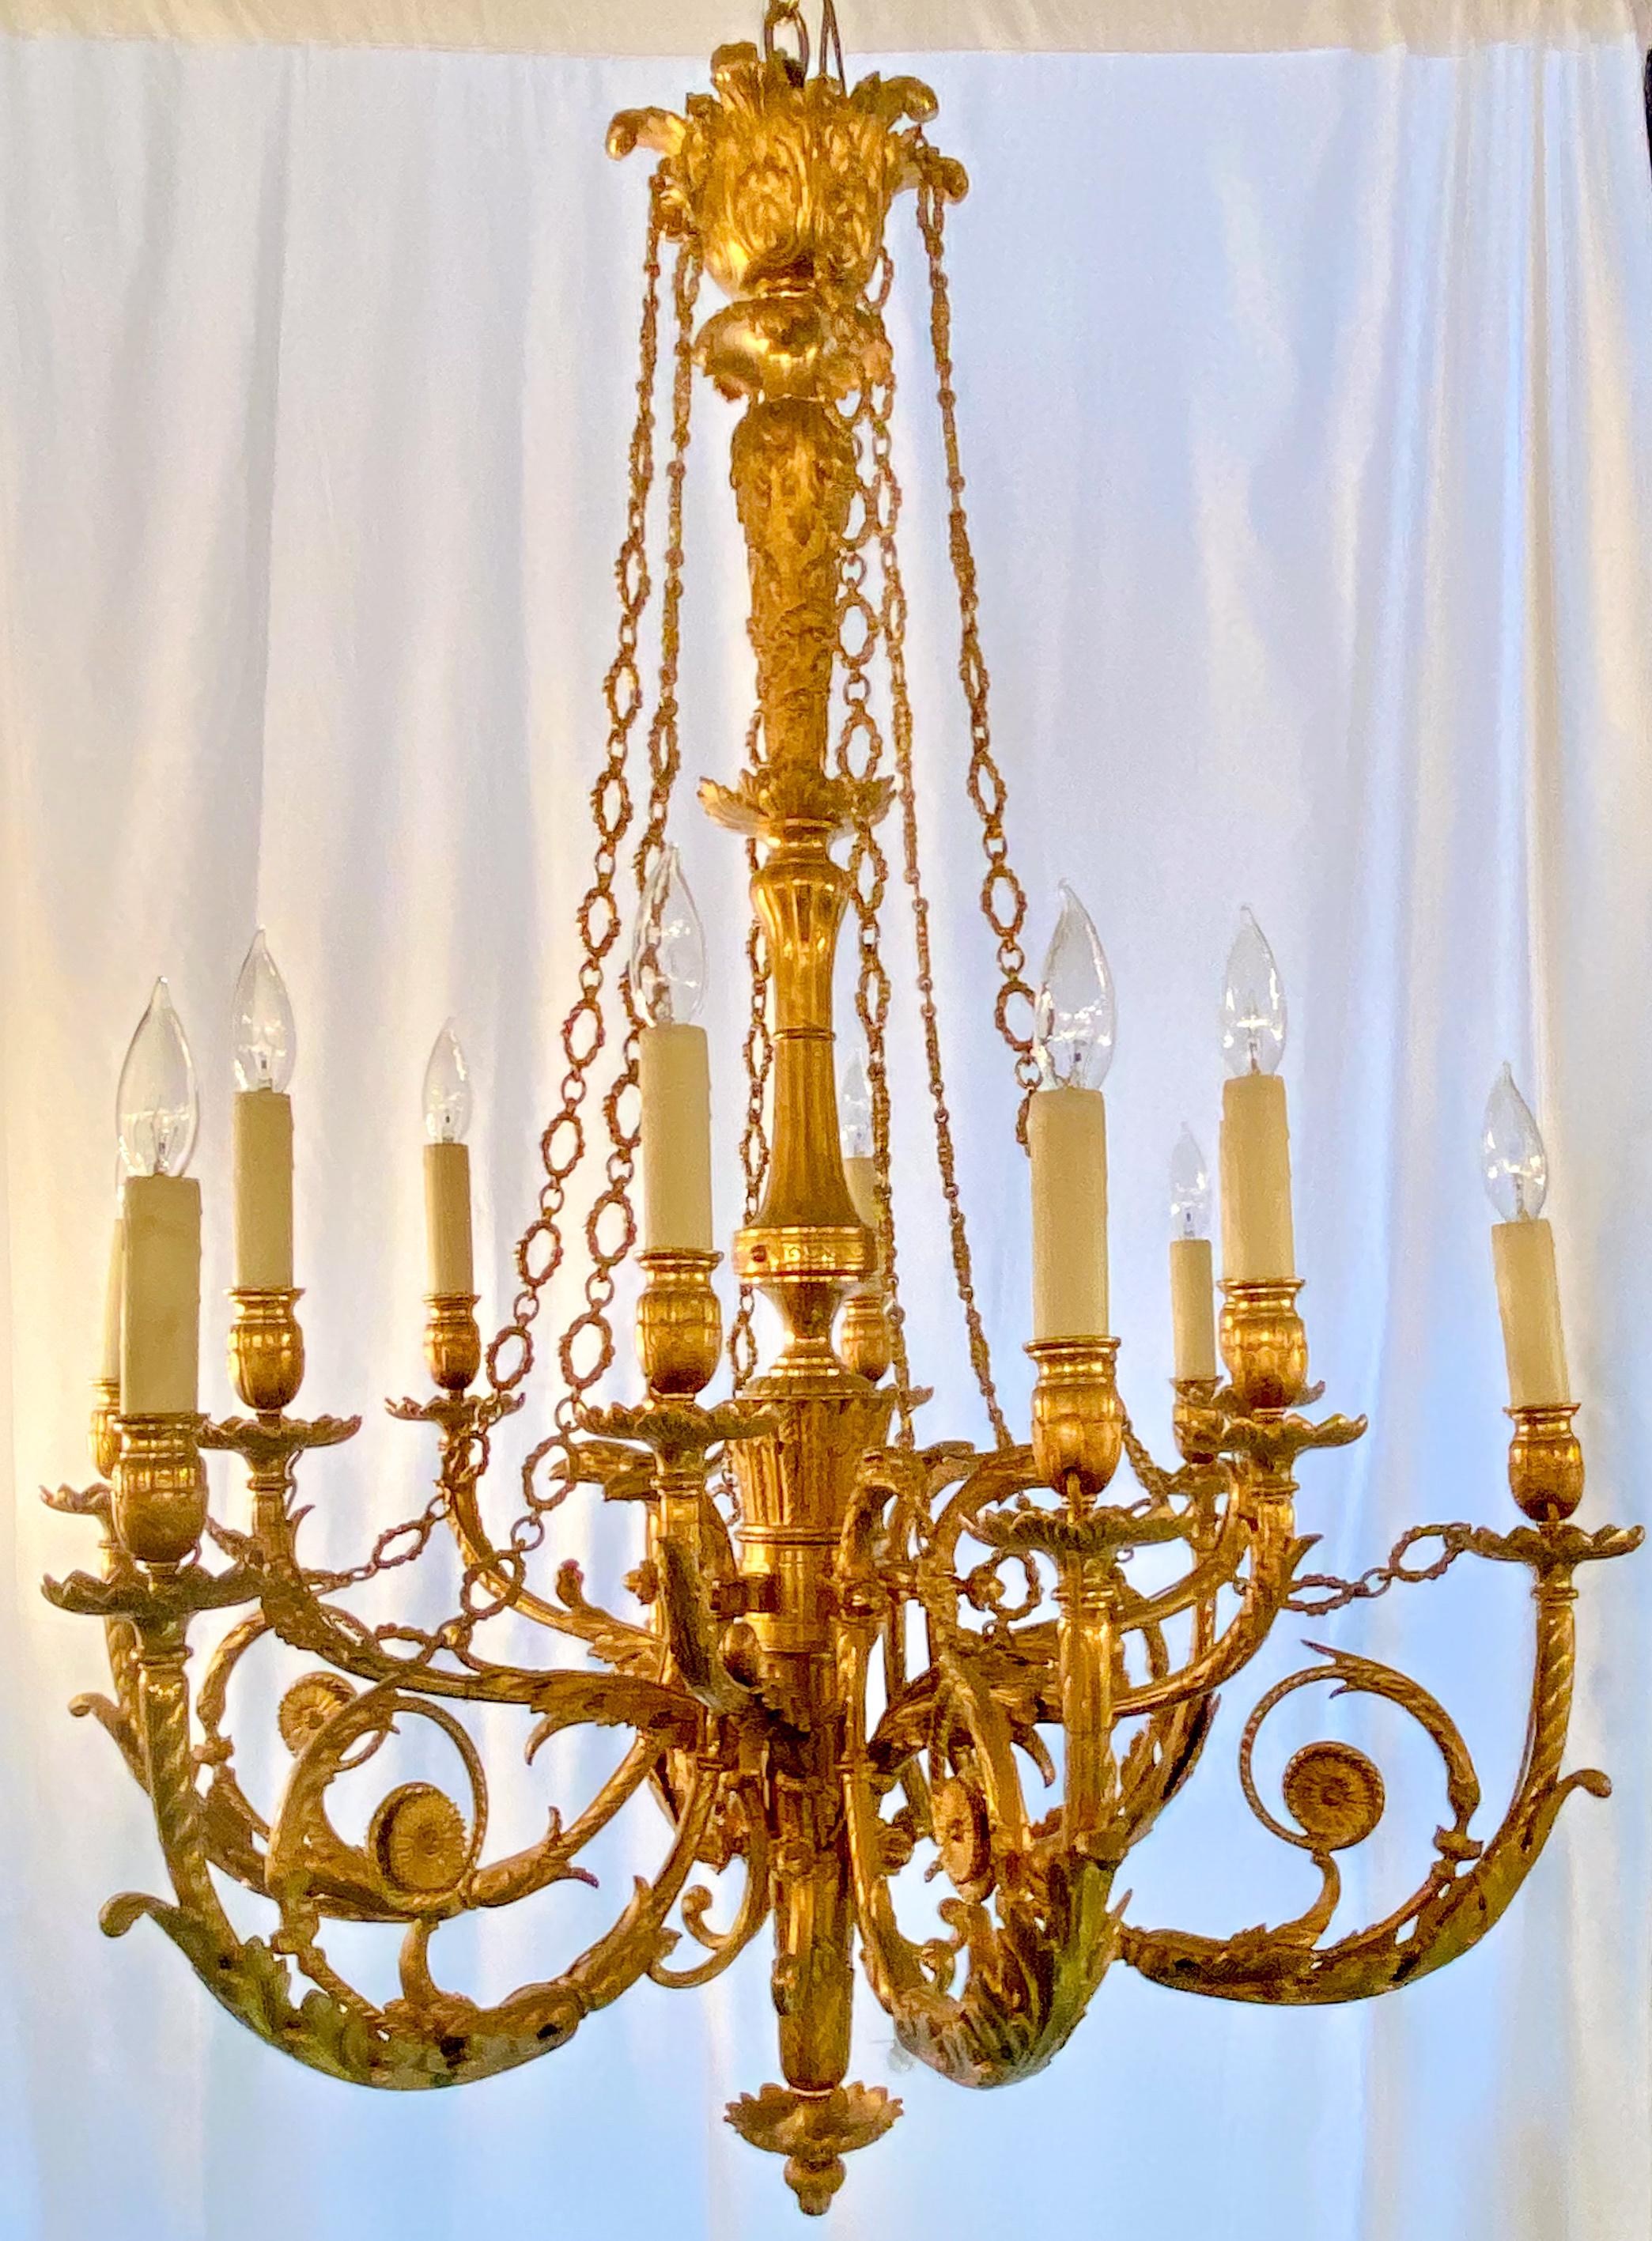 Antique French bronze dore Louis XVI style chandelier, circa 1870-1880.